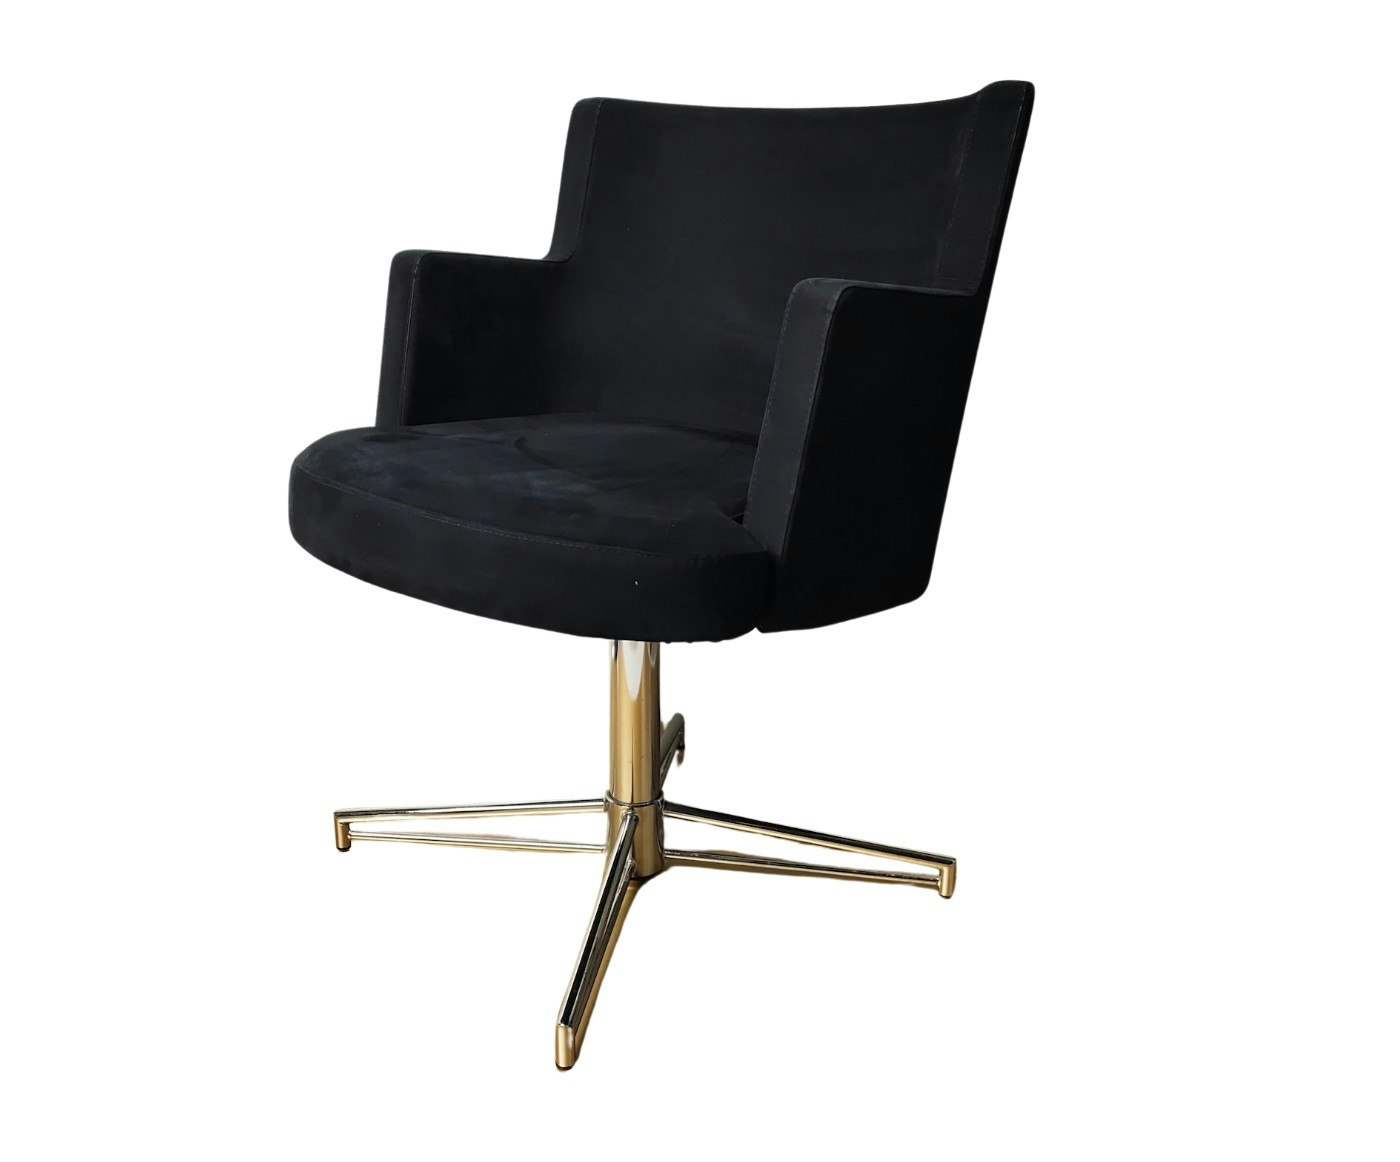 Hyr stol / fåtölj, Johanson Design Cape - Svart alcantara